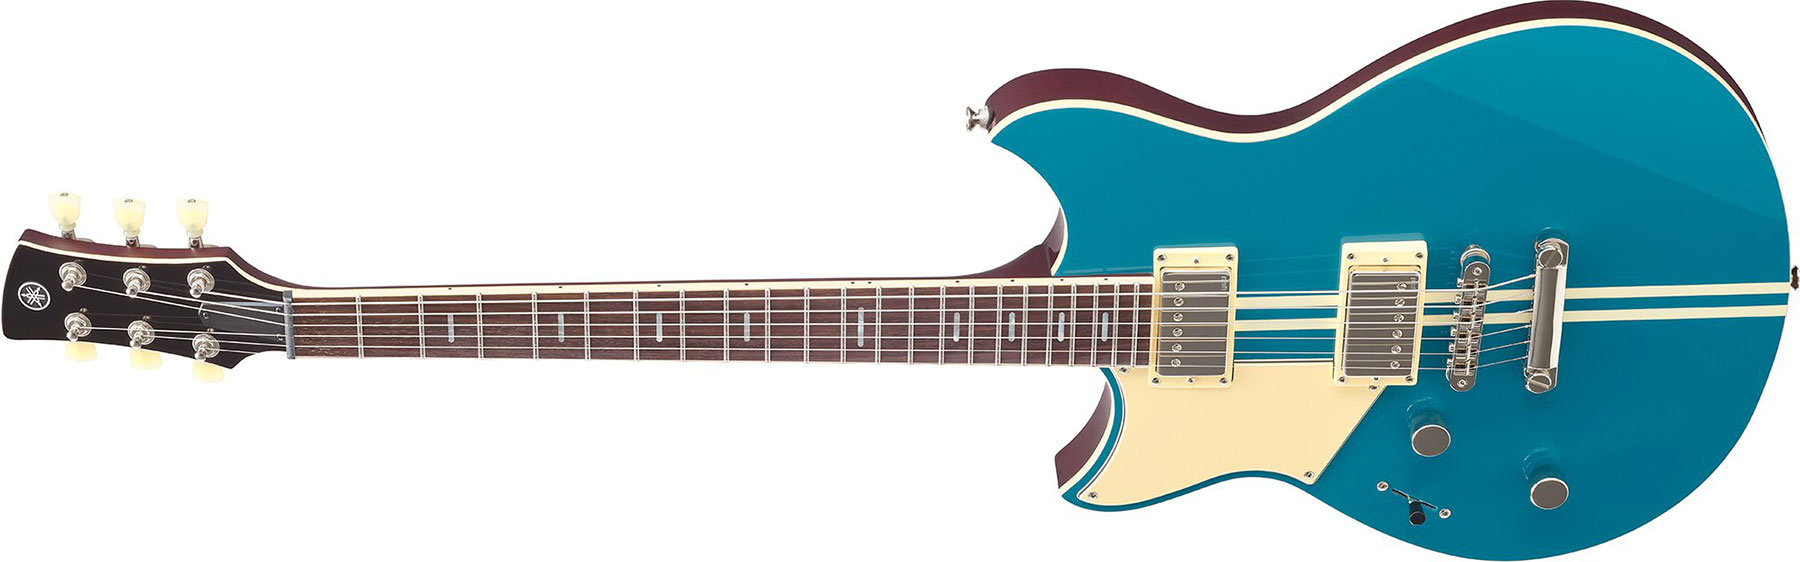 Yamaha Rss20l Revstar Standard Lh Gaucher Hh Ht Rw - Swift Blue - Left-handed electric guitar - Variation 1